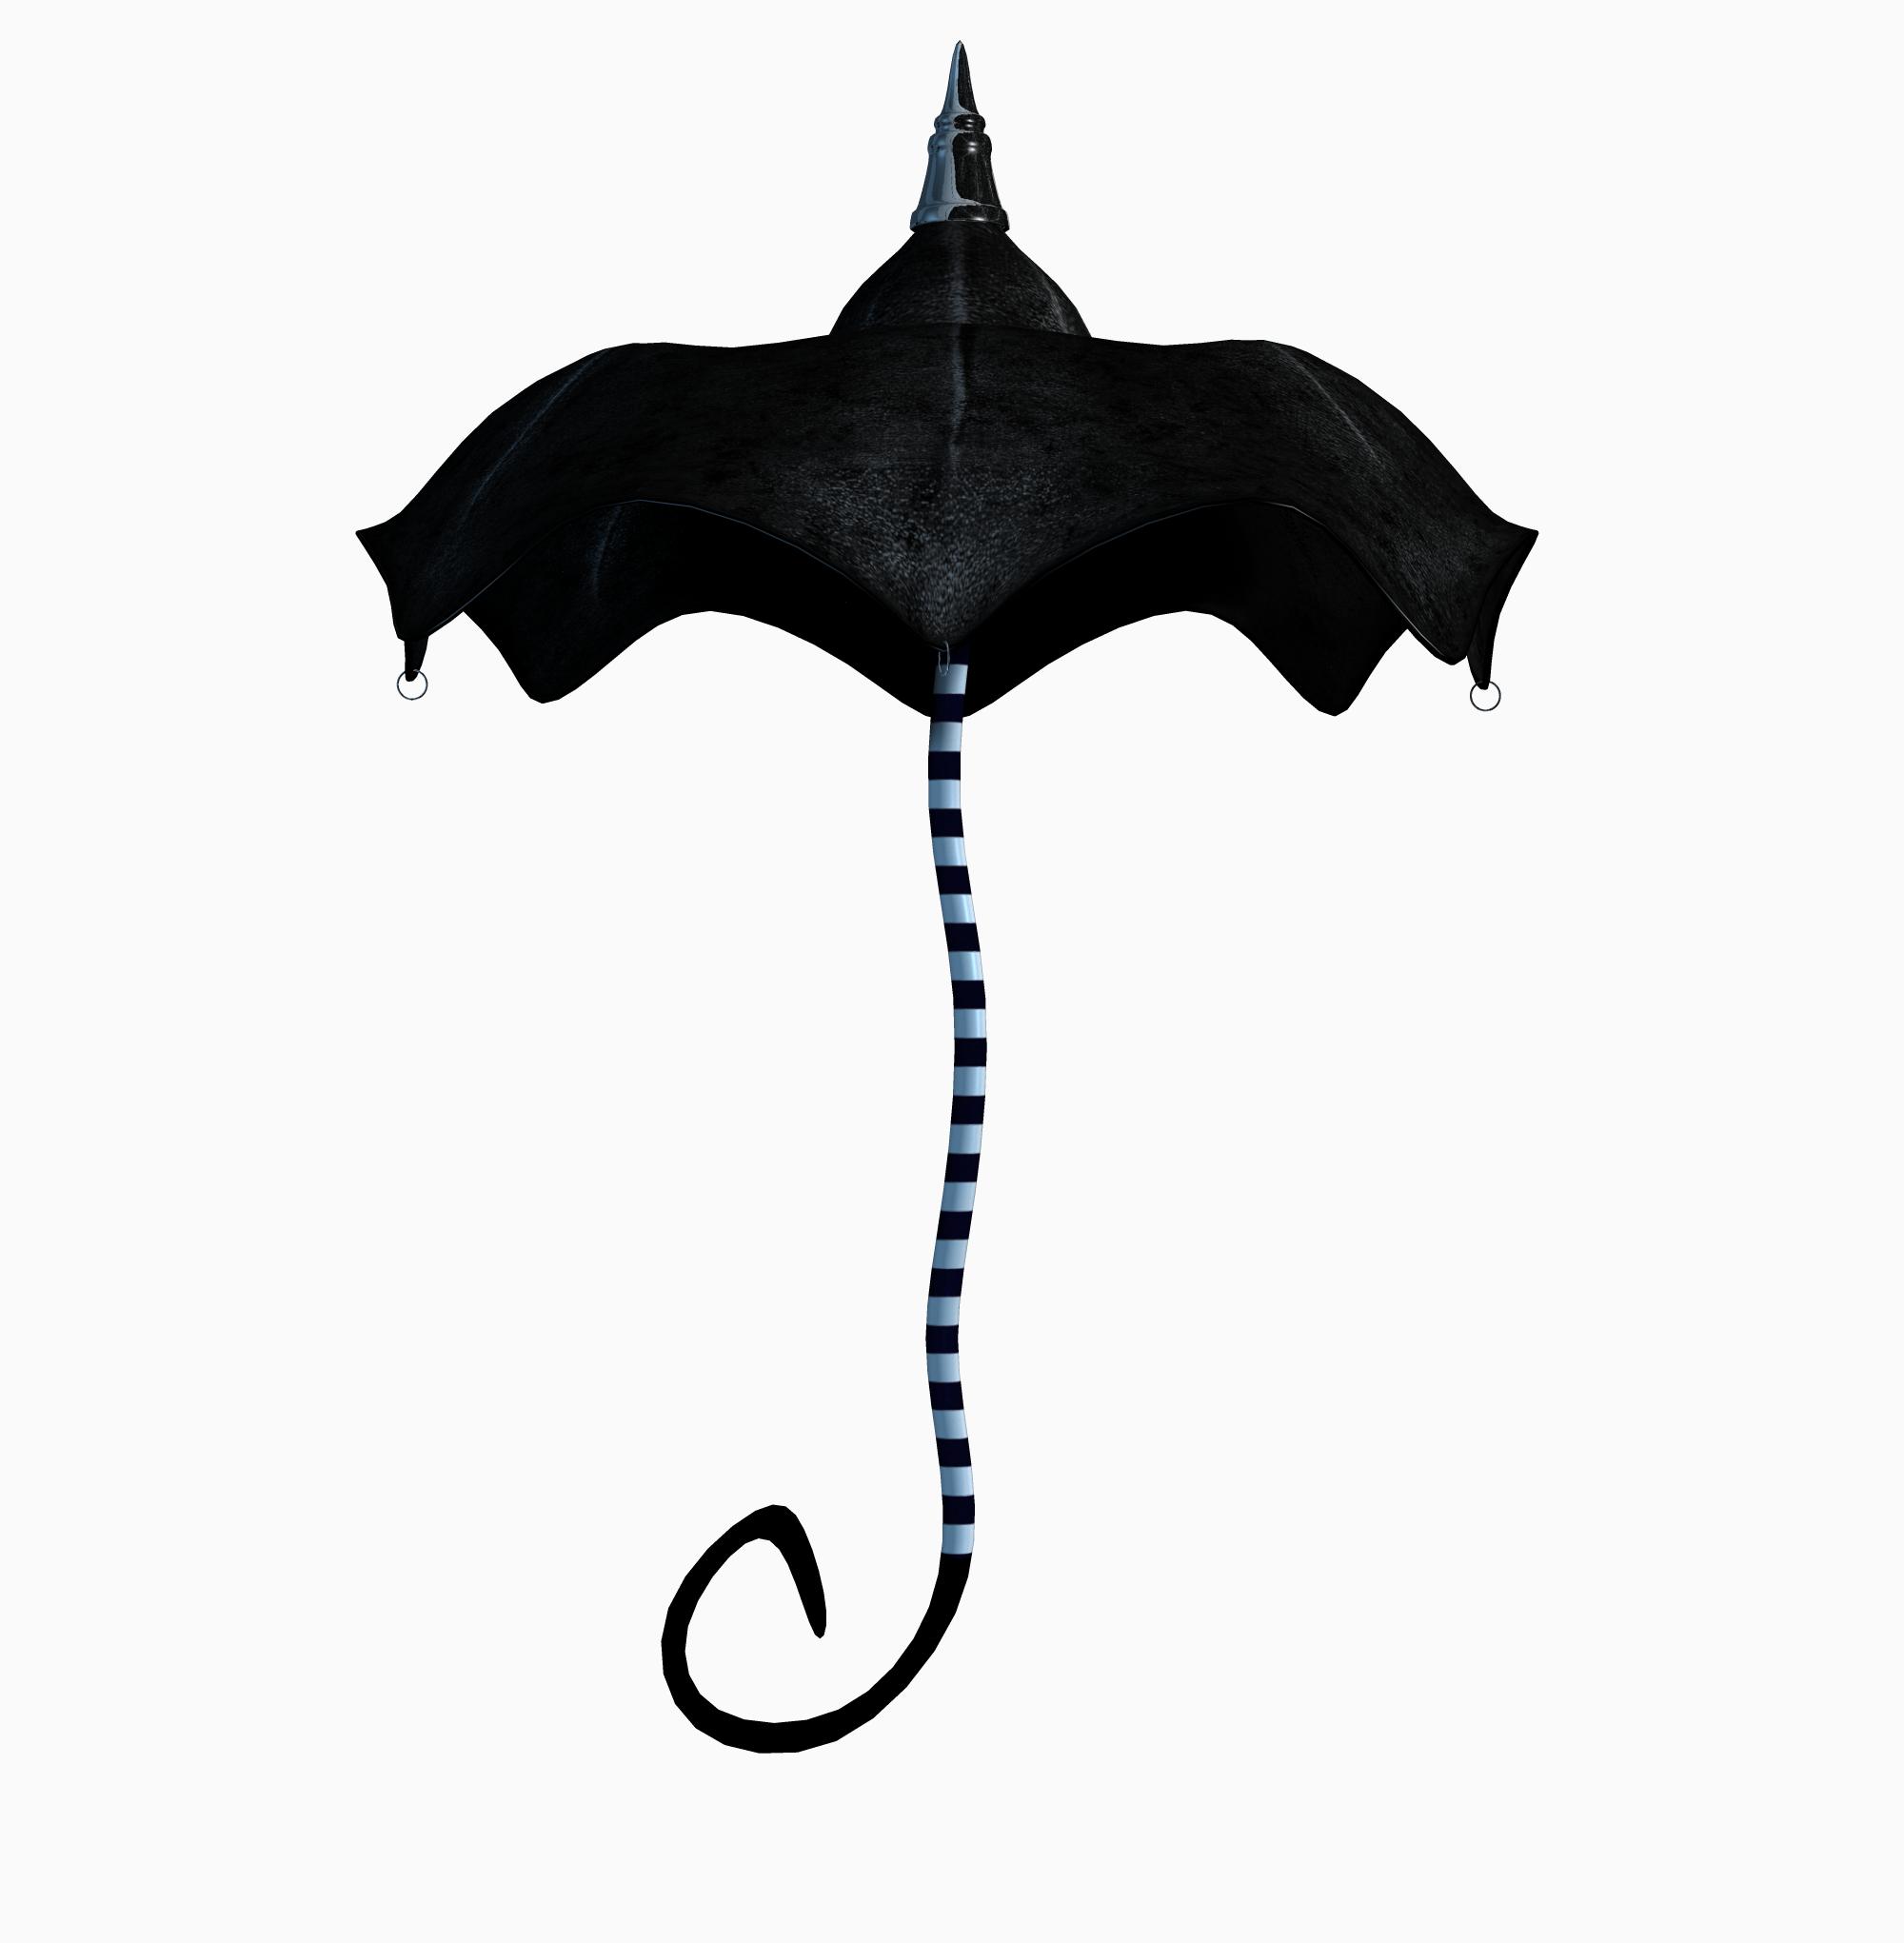 Gothic_Umbrella_by_stock4profs.jpg